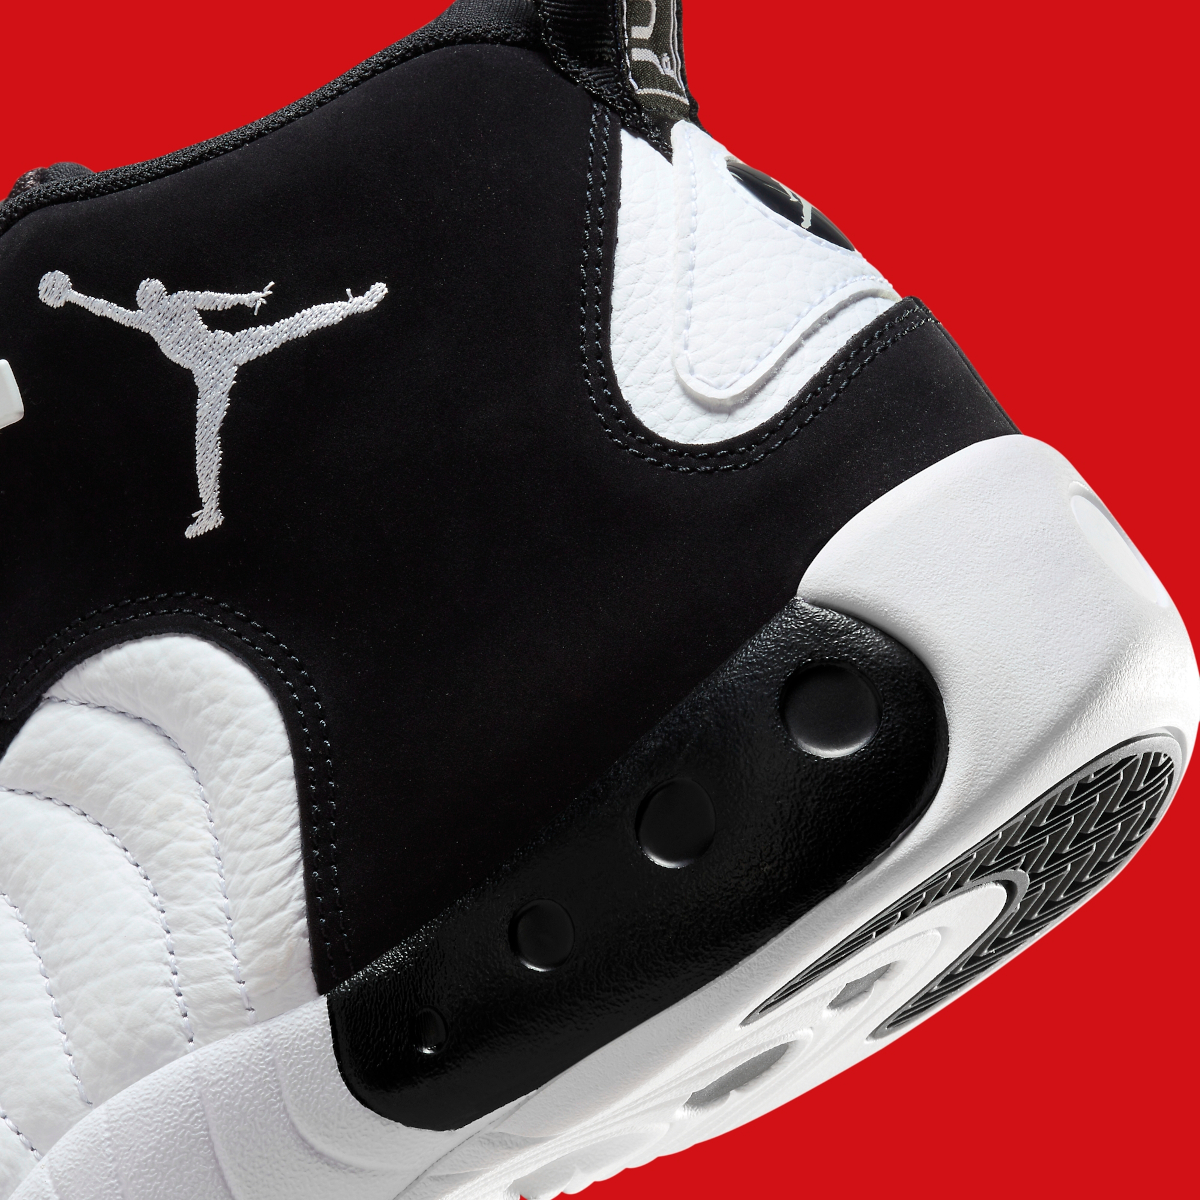 Sneaker Tees shirts in BLACK CREWNECK to match French Blue 7 Air Jordan Retros White Black Dn3686 110 8